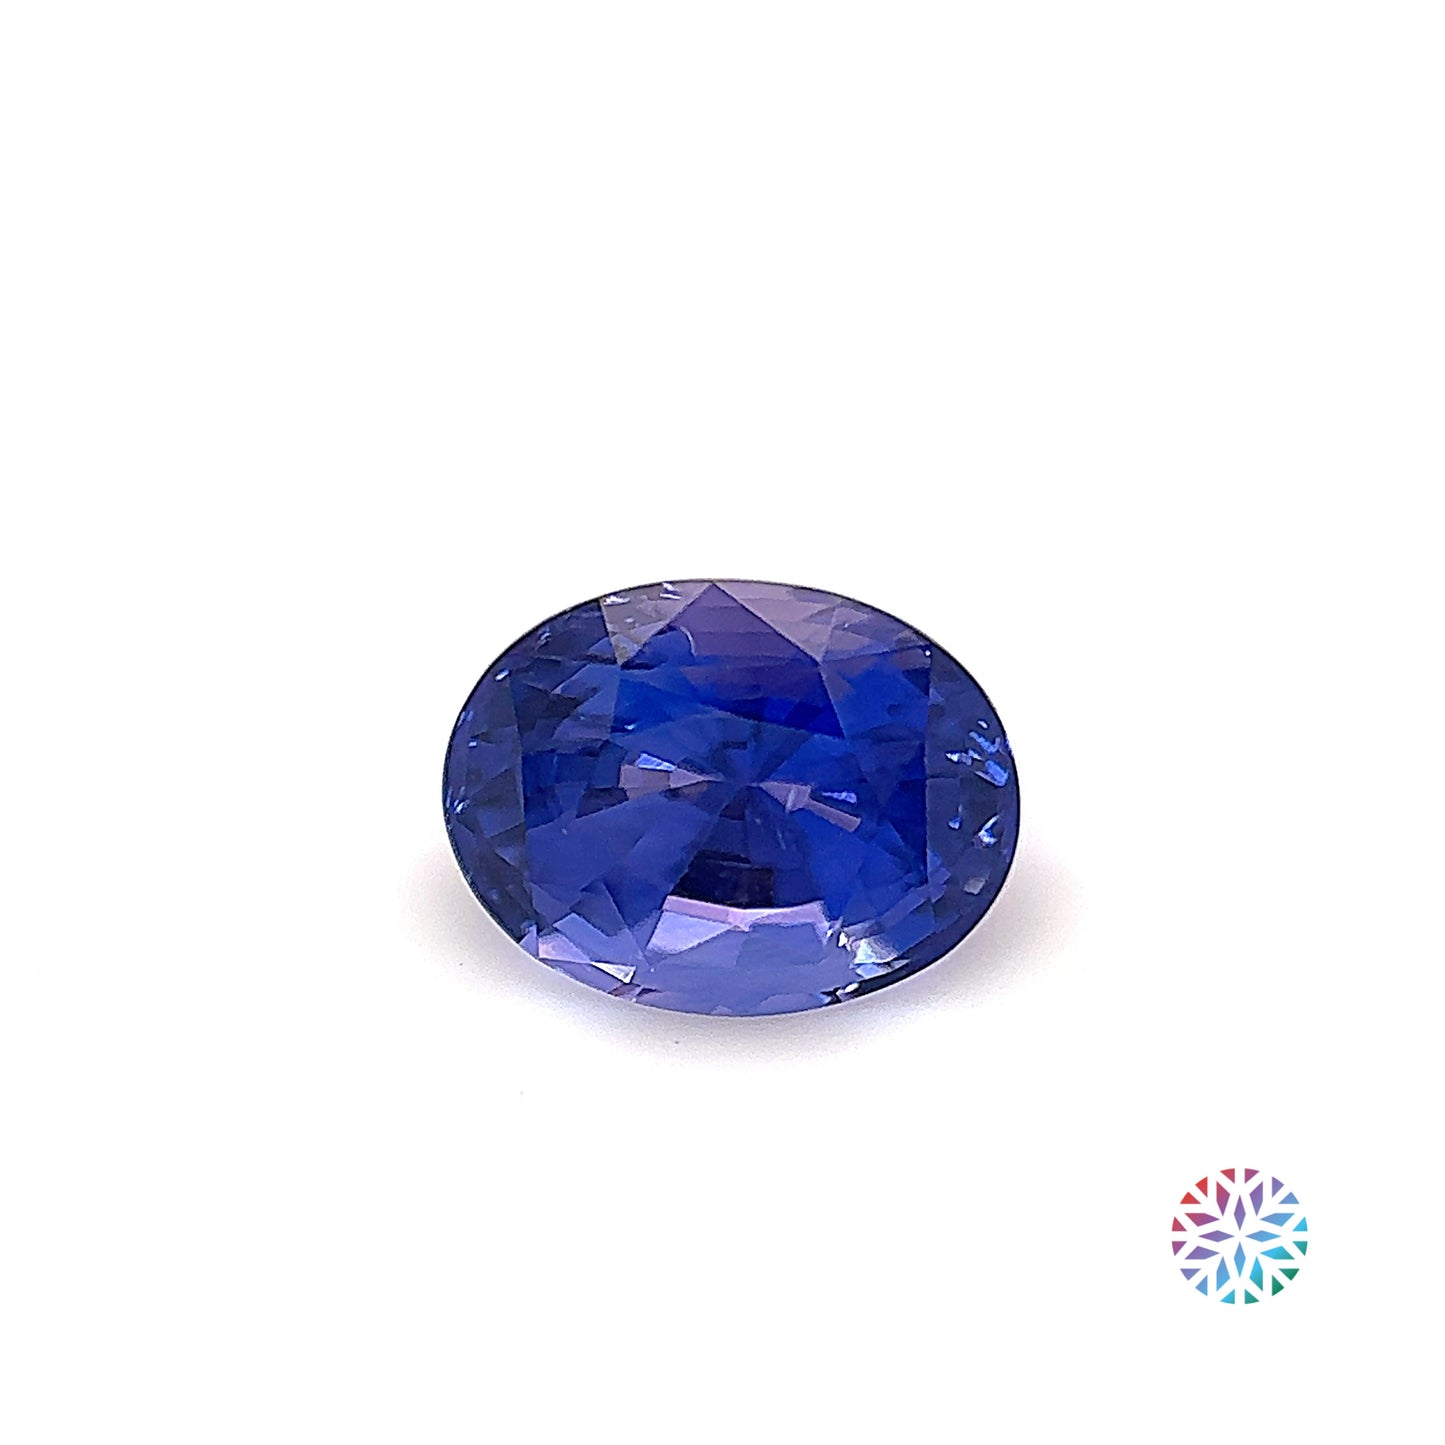 CC Sapphire- Oval, 2.36ct, 8.5 x 6.5 x 5.3mm, (C)